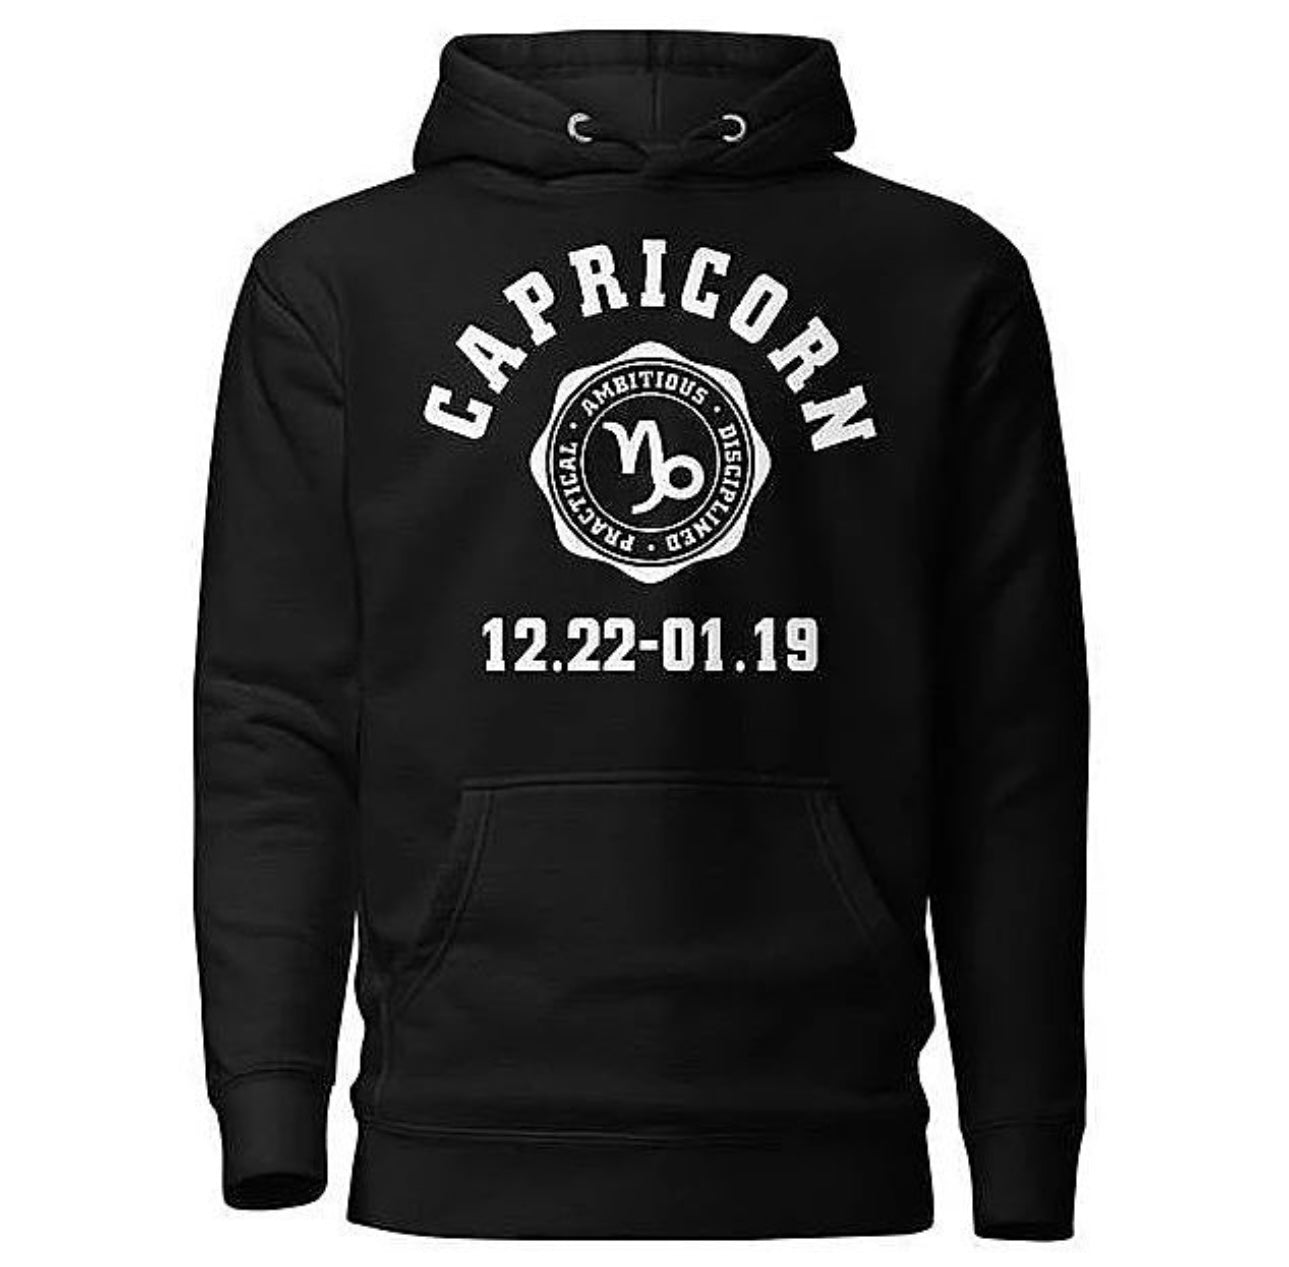 Capricorn hoodie